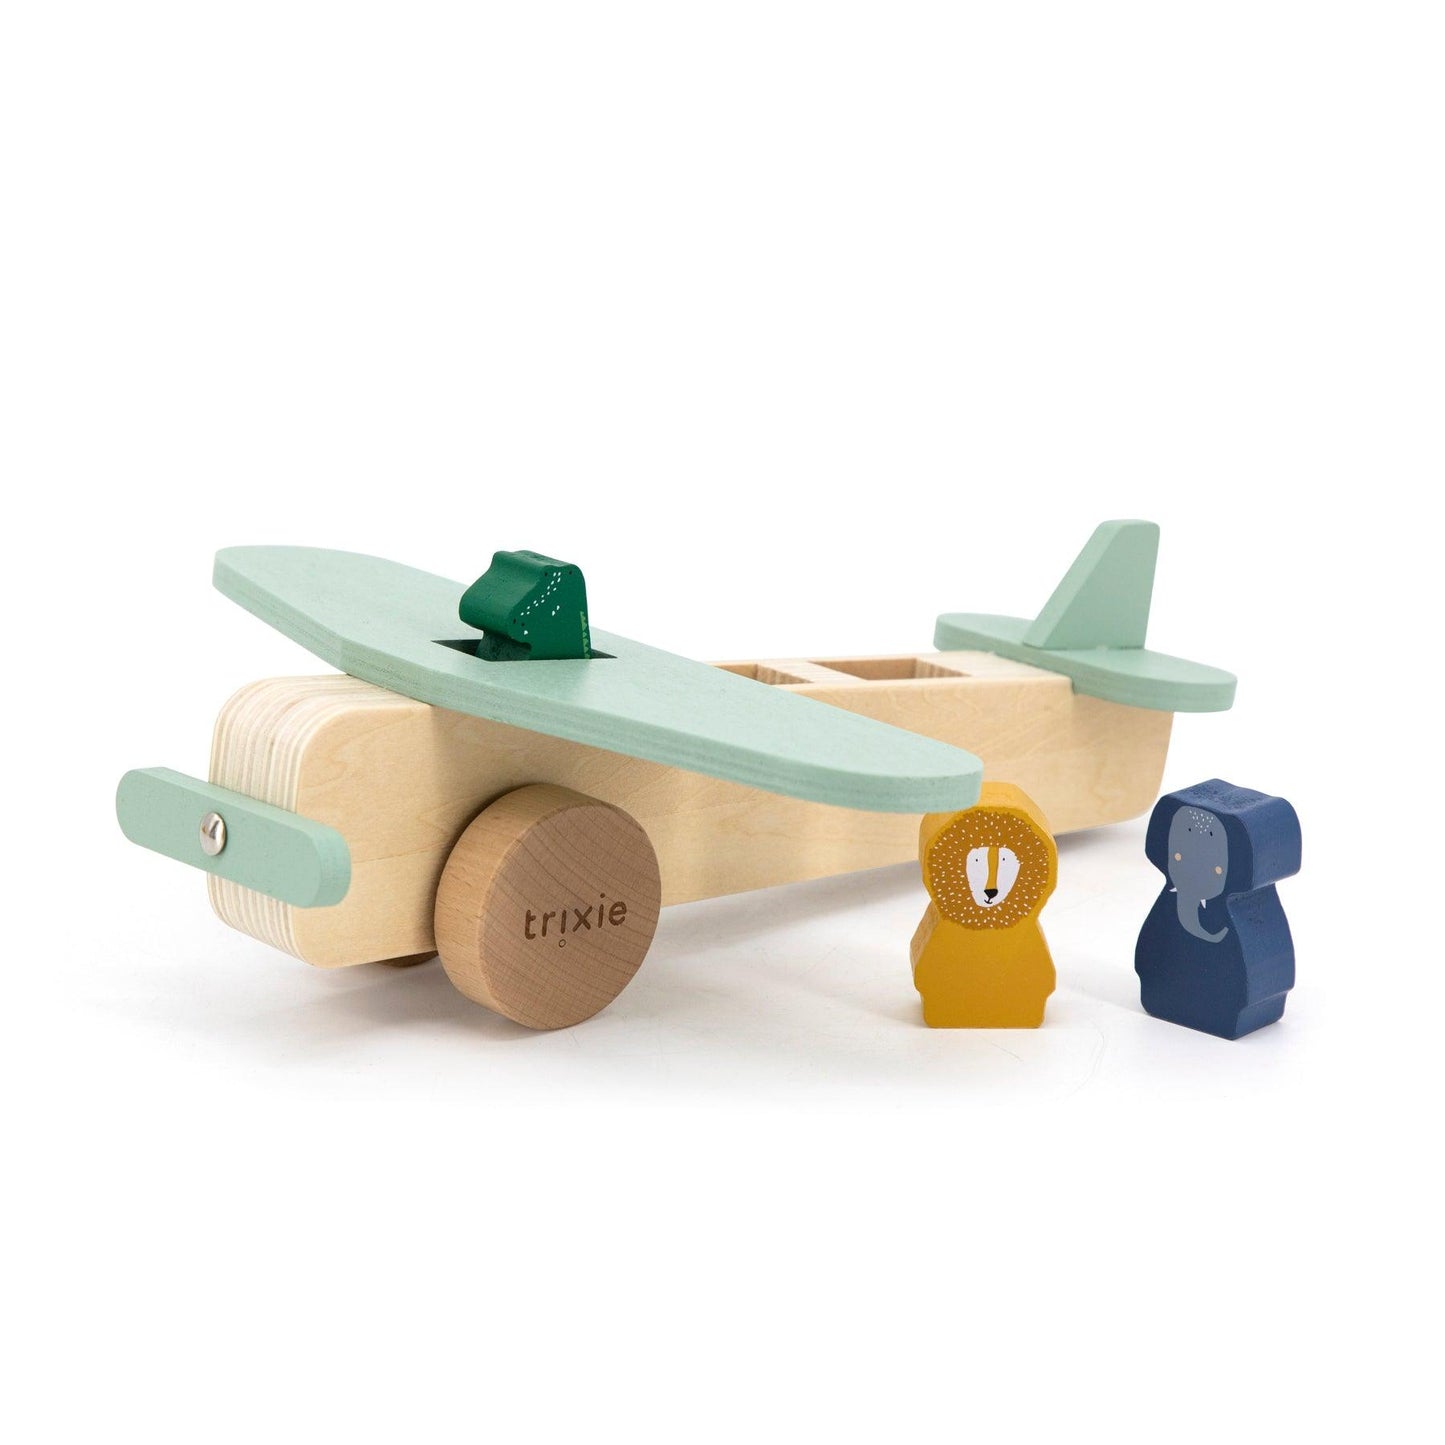 TRIXIE // Wooden Animal Airplane